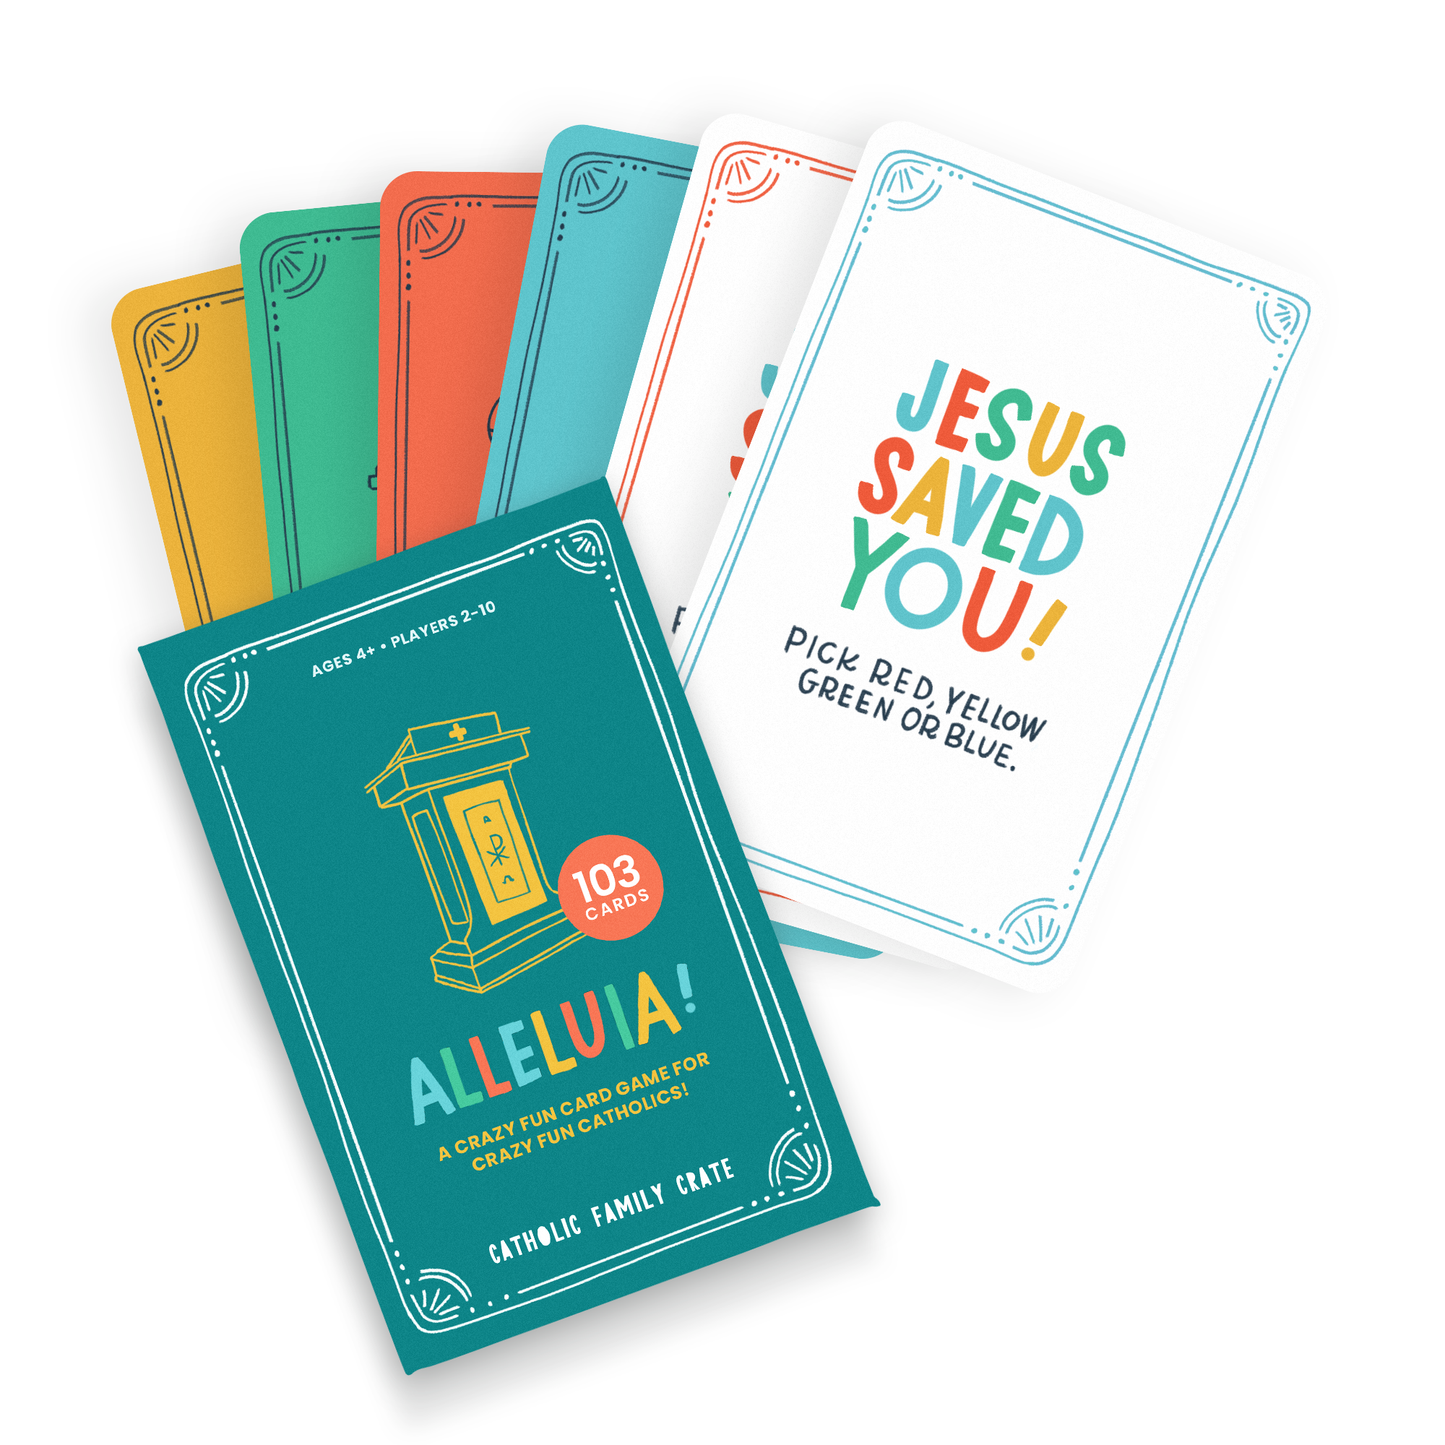 "Alleluia" Card Game